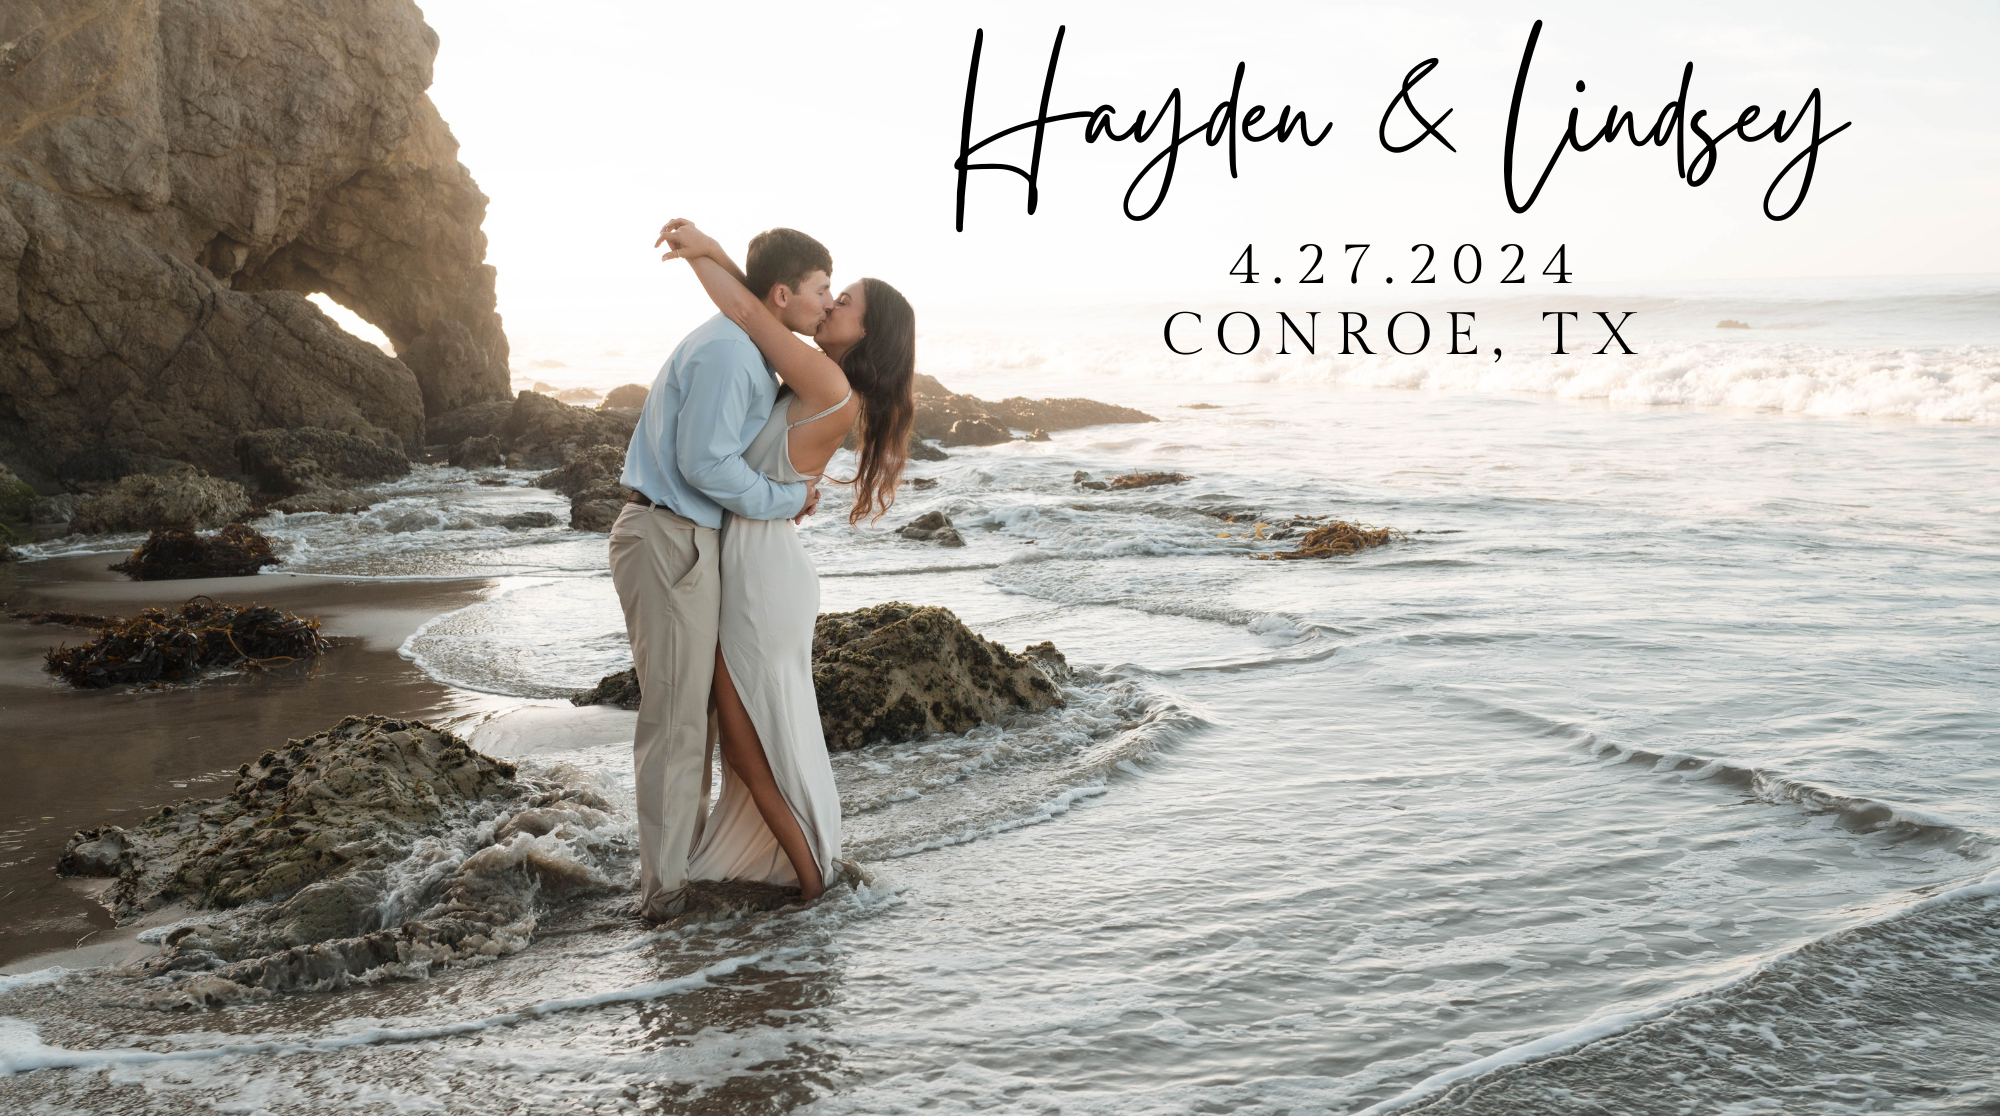 The Wedding Website of Lindsey Witt and Hayden Mundy